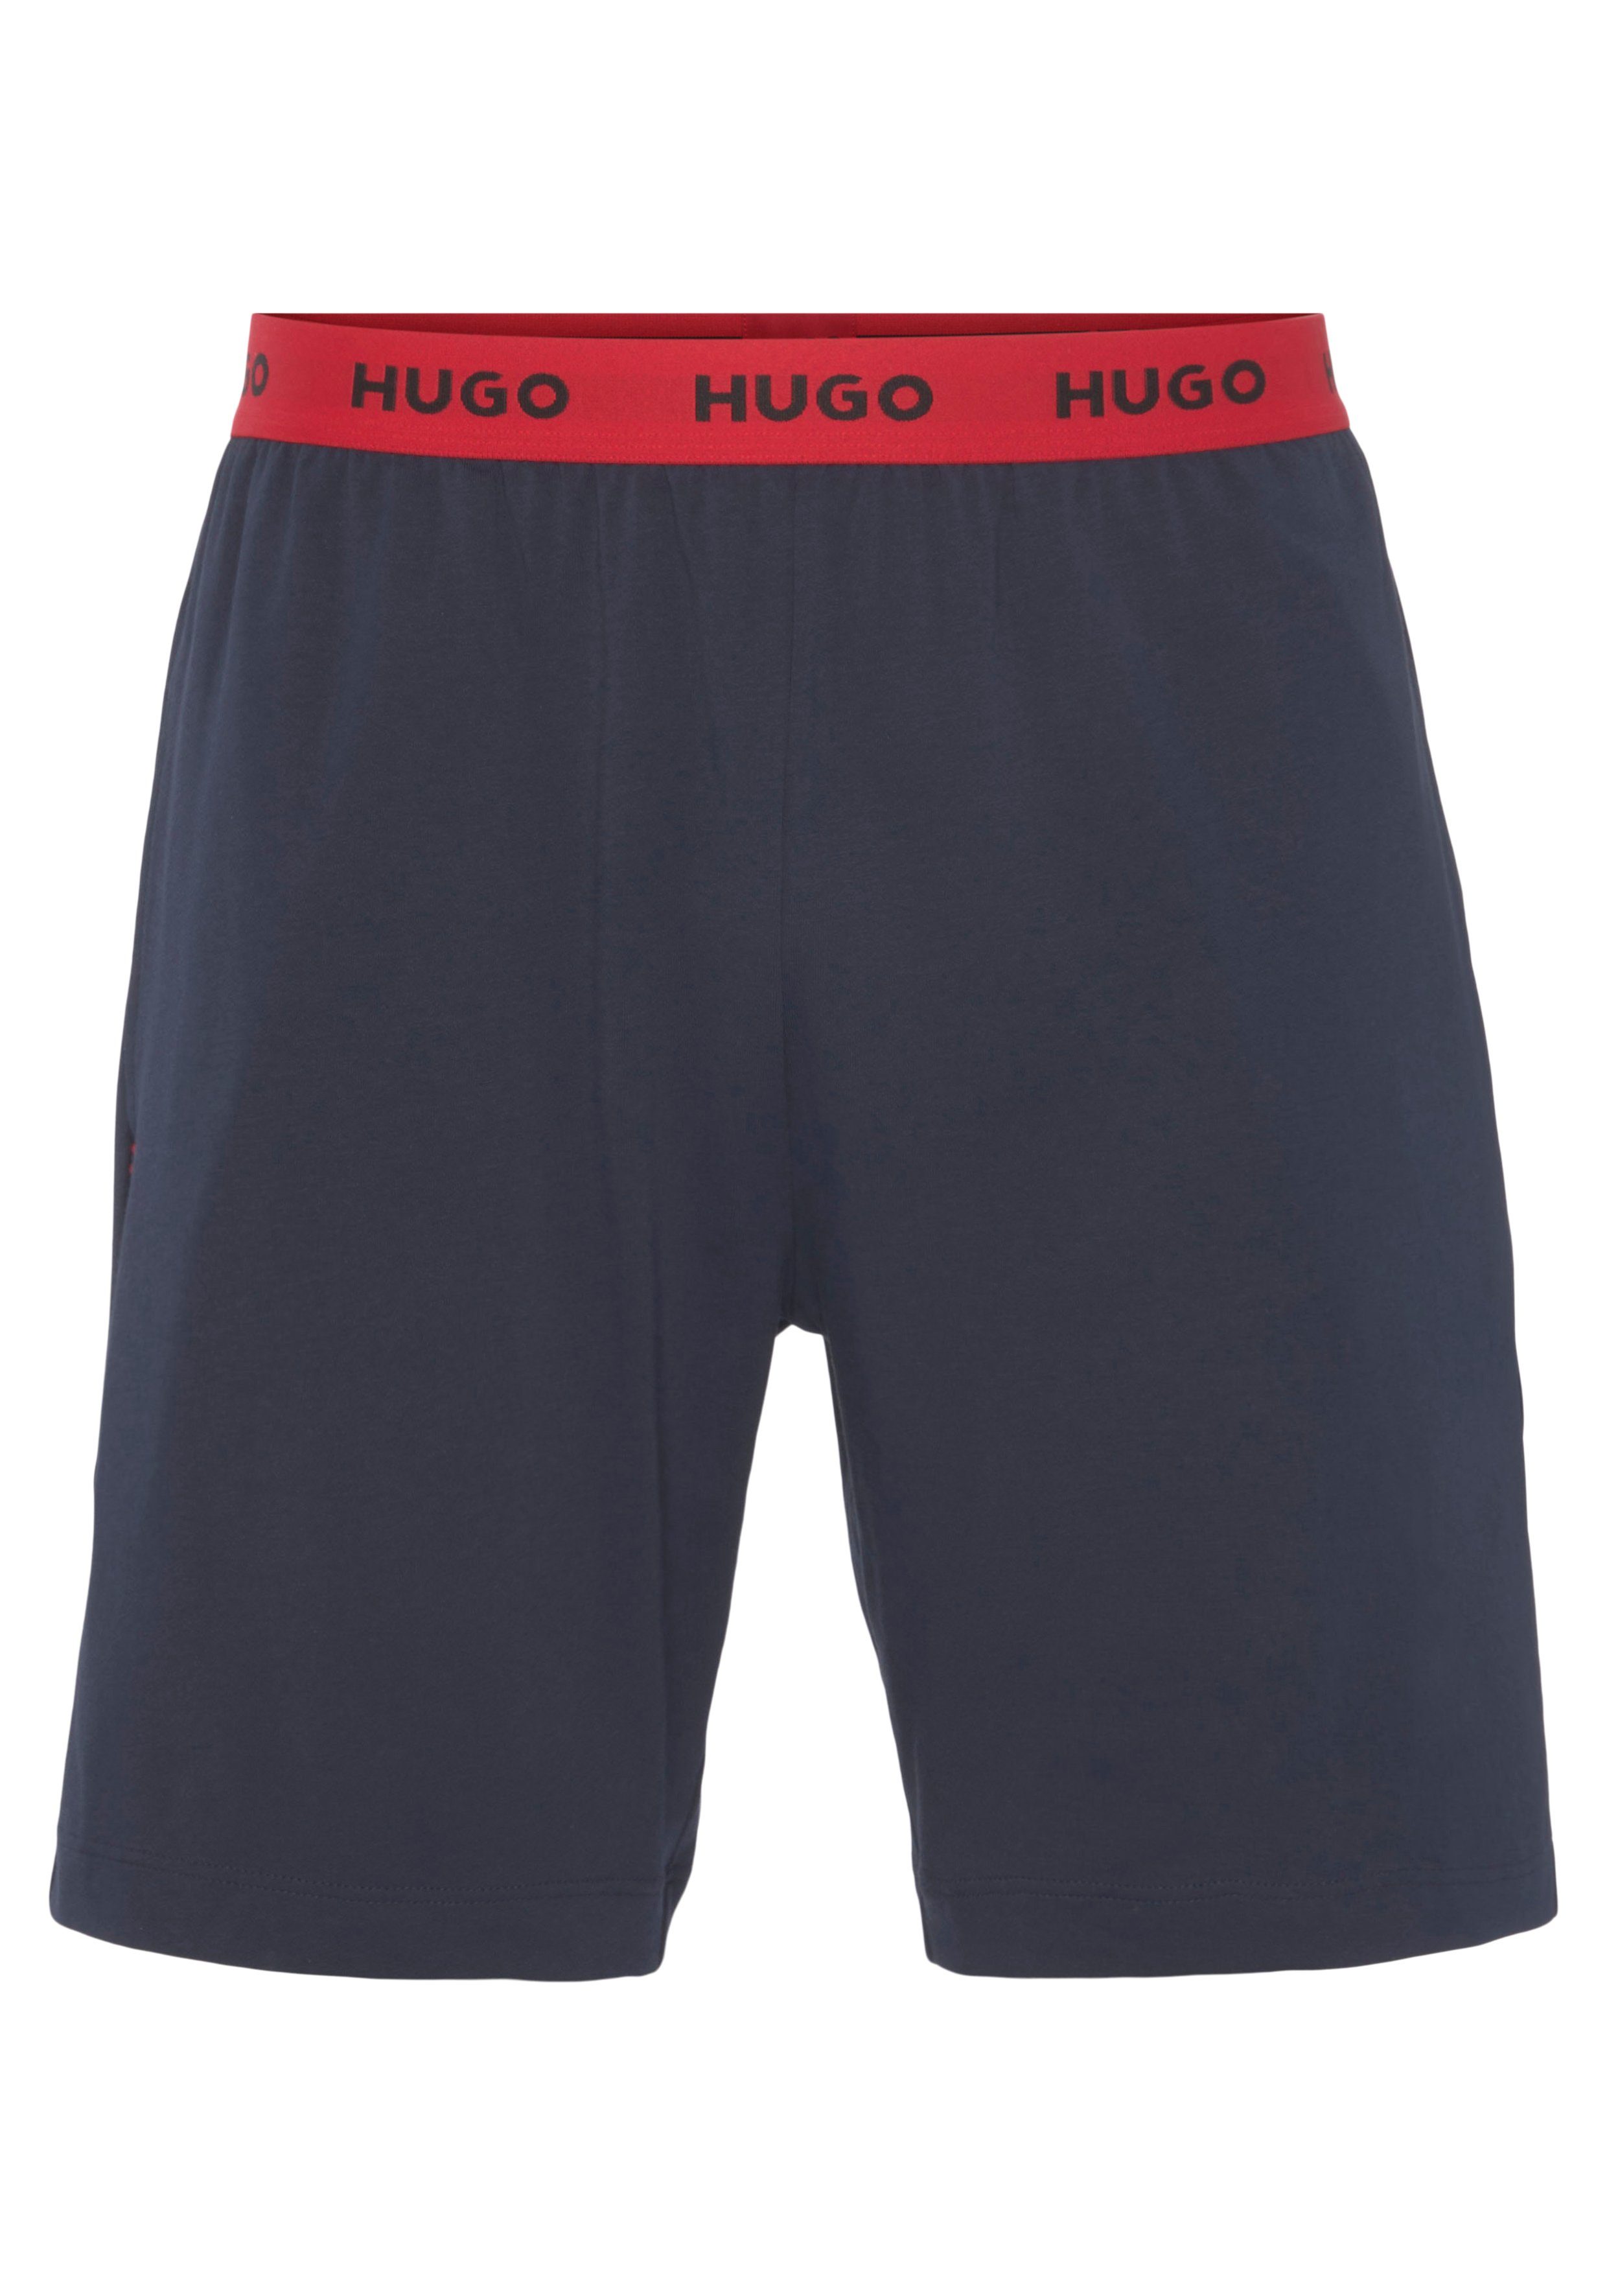 HUGO Sweatshorts HUGO 405 Short Logobund Linked dark mit Pant blue